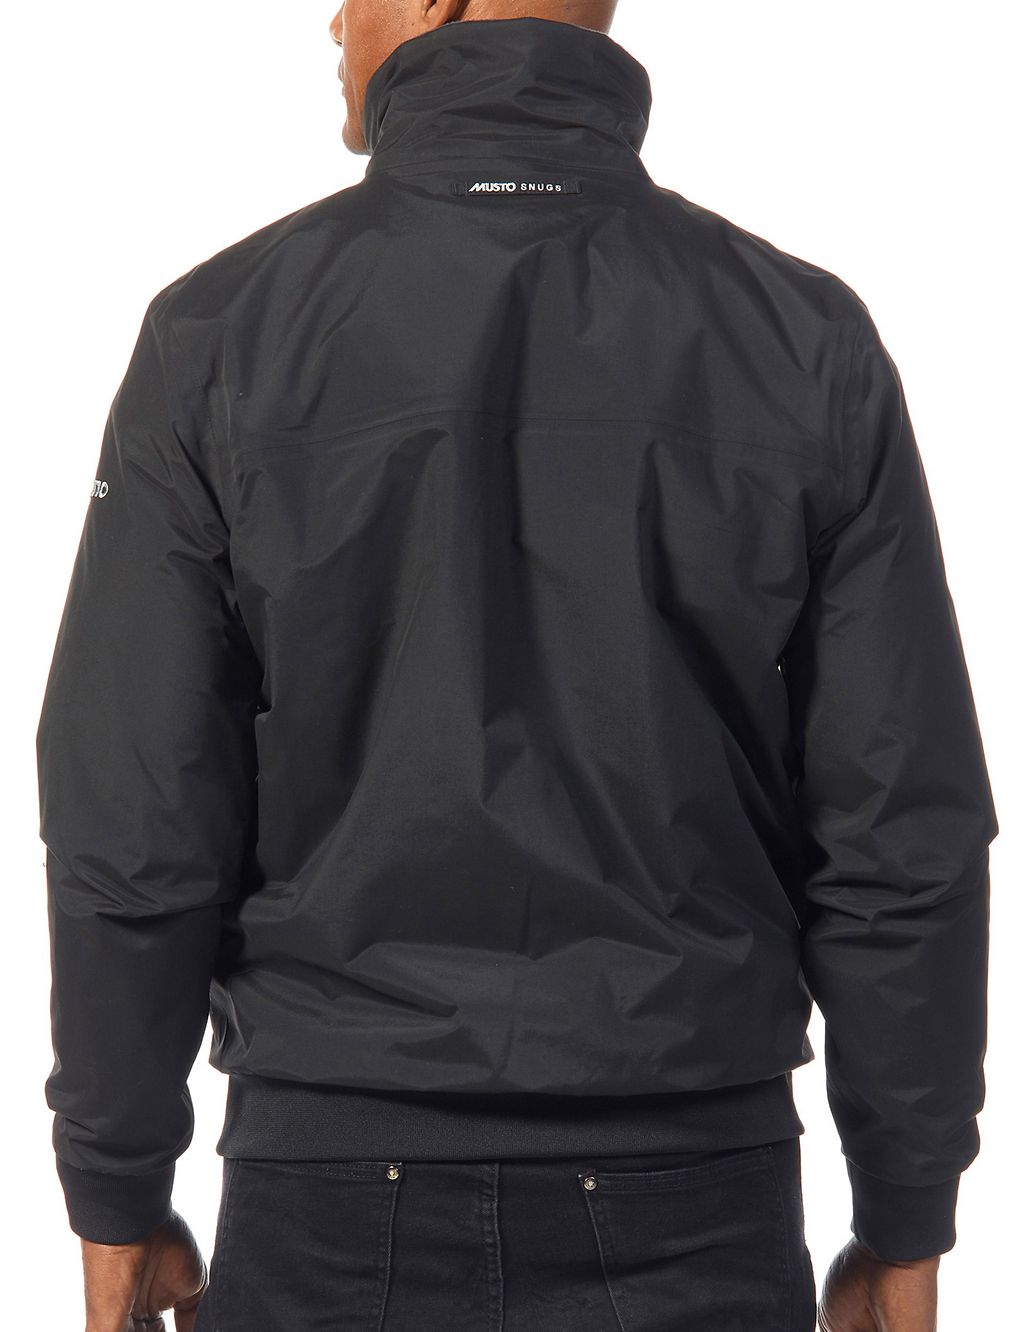 Snug Fleece Lined Jacket | Musto | M&S